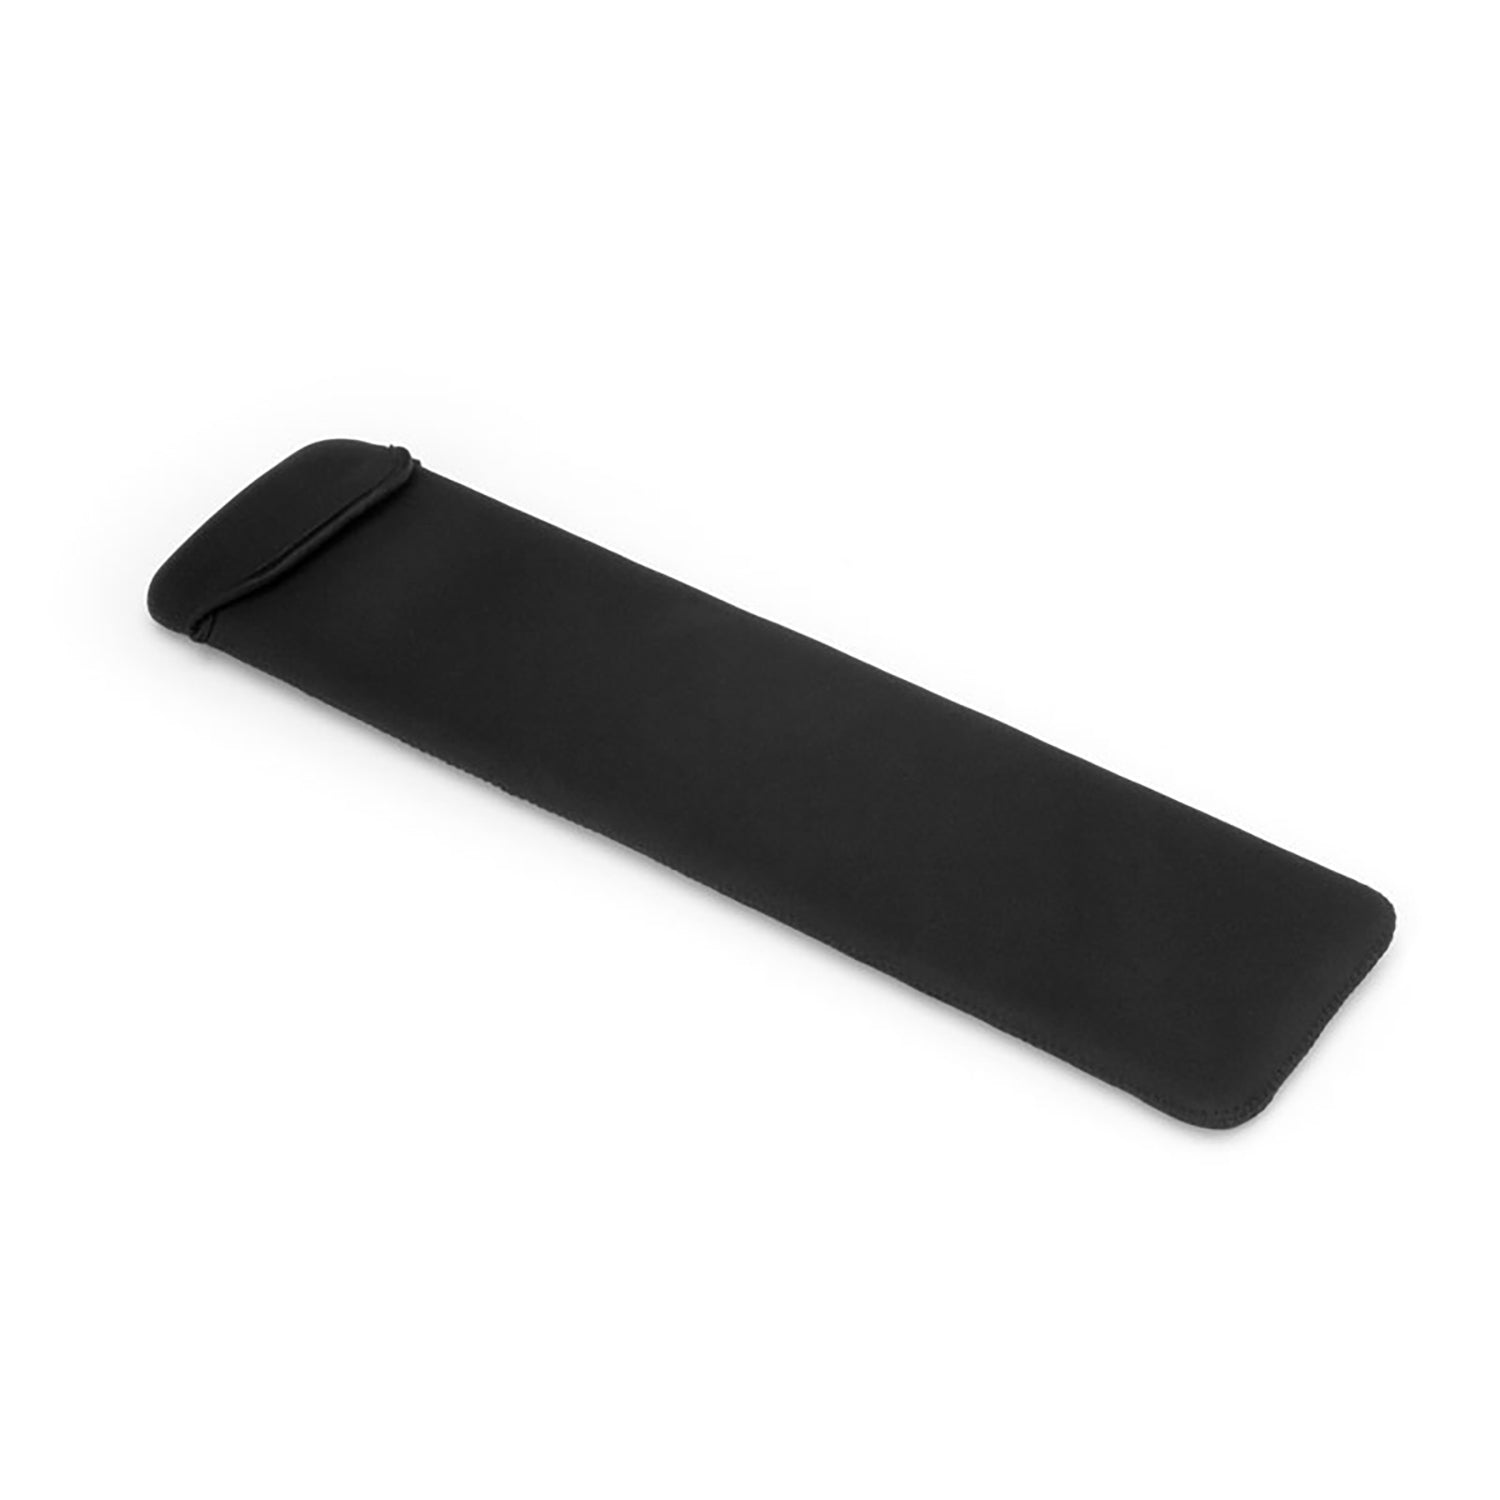 Grifiti Chiton Slim 17 Slim Keyboard Sleeve for Apple Logitech Steel Series - Grifiti